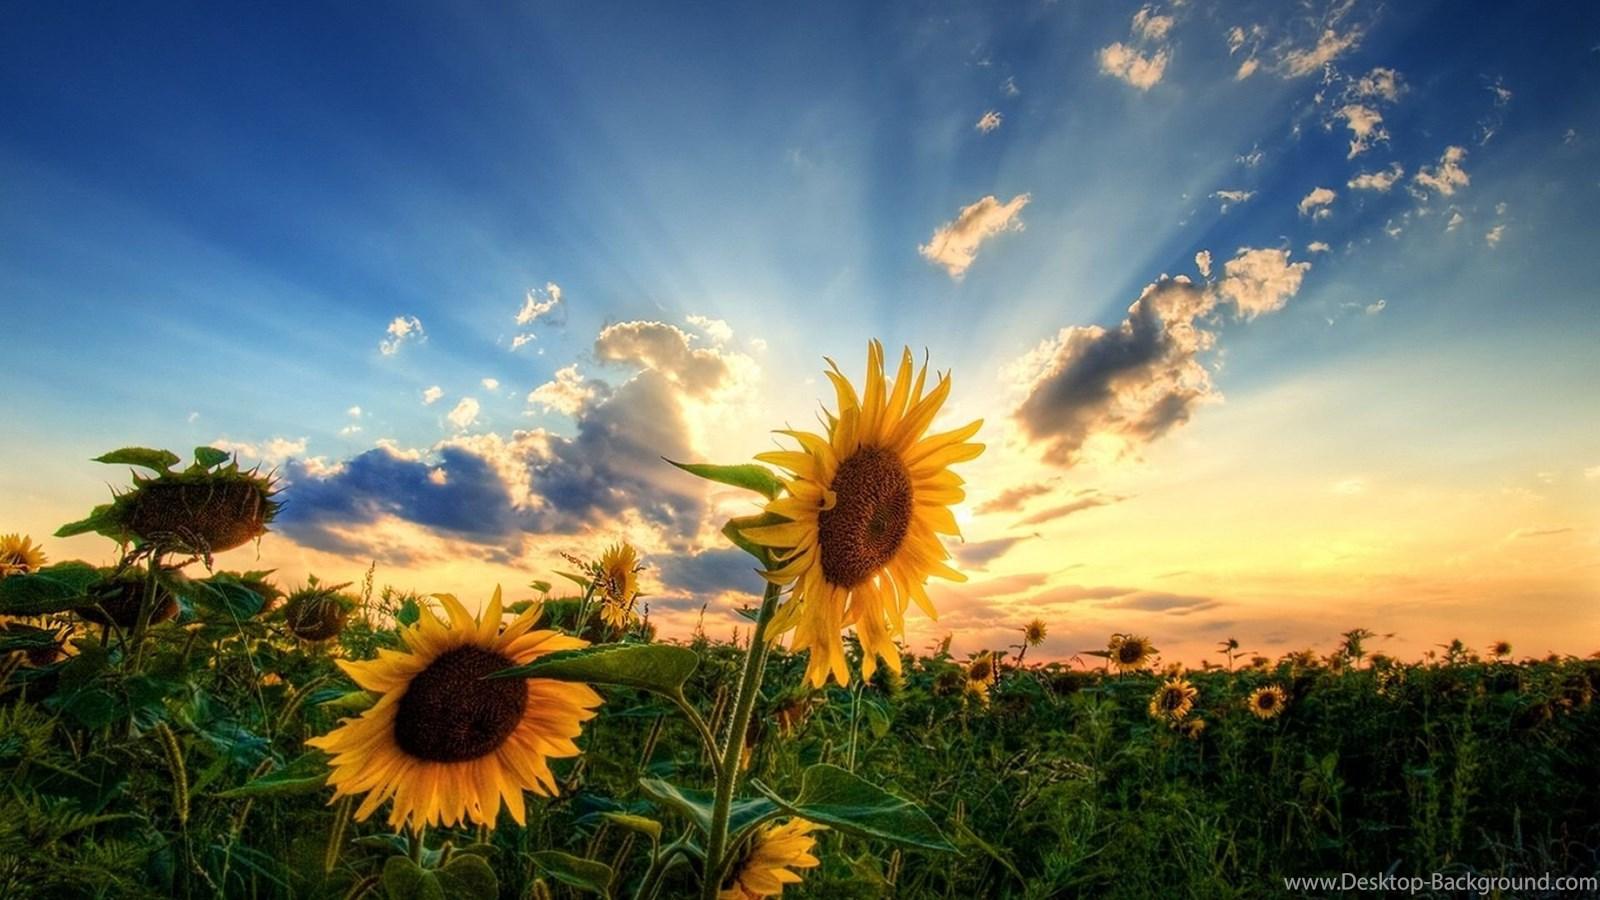 Download Sunflower Sunset Wallpaper High Quality Desktop Background